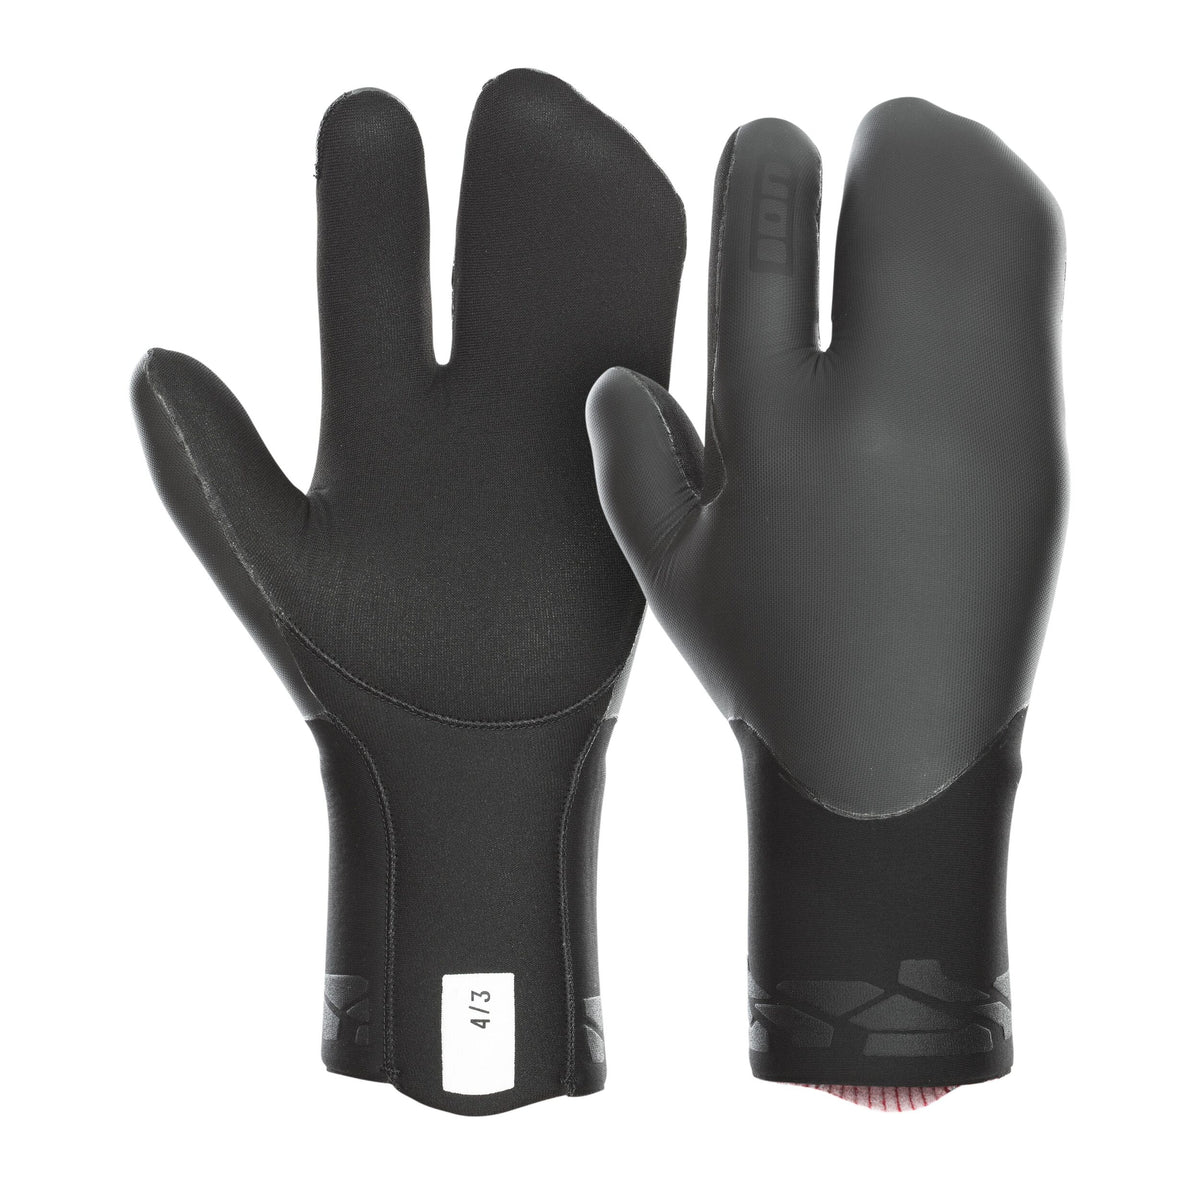 ION LOBSTER MITTEN 4/3 BLACK neoprene gloves